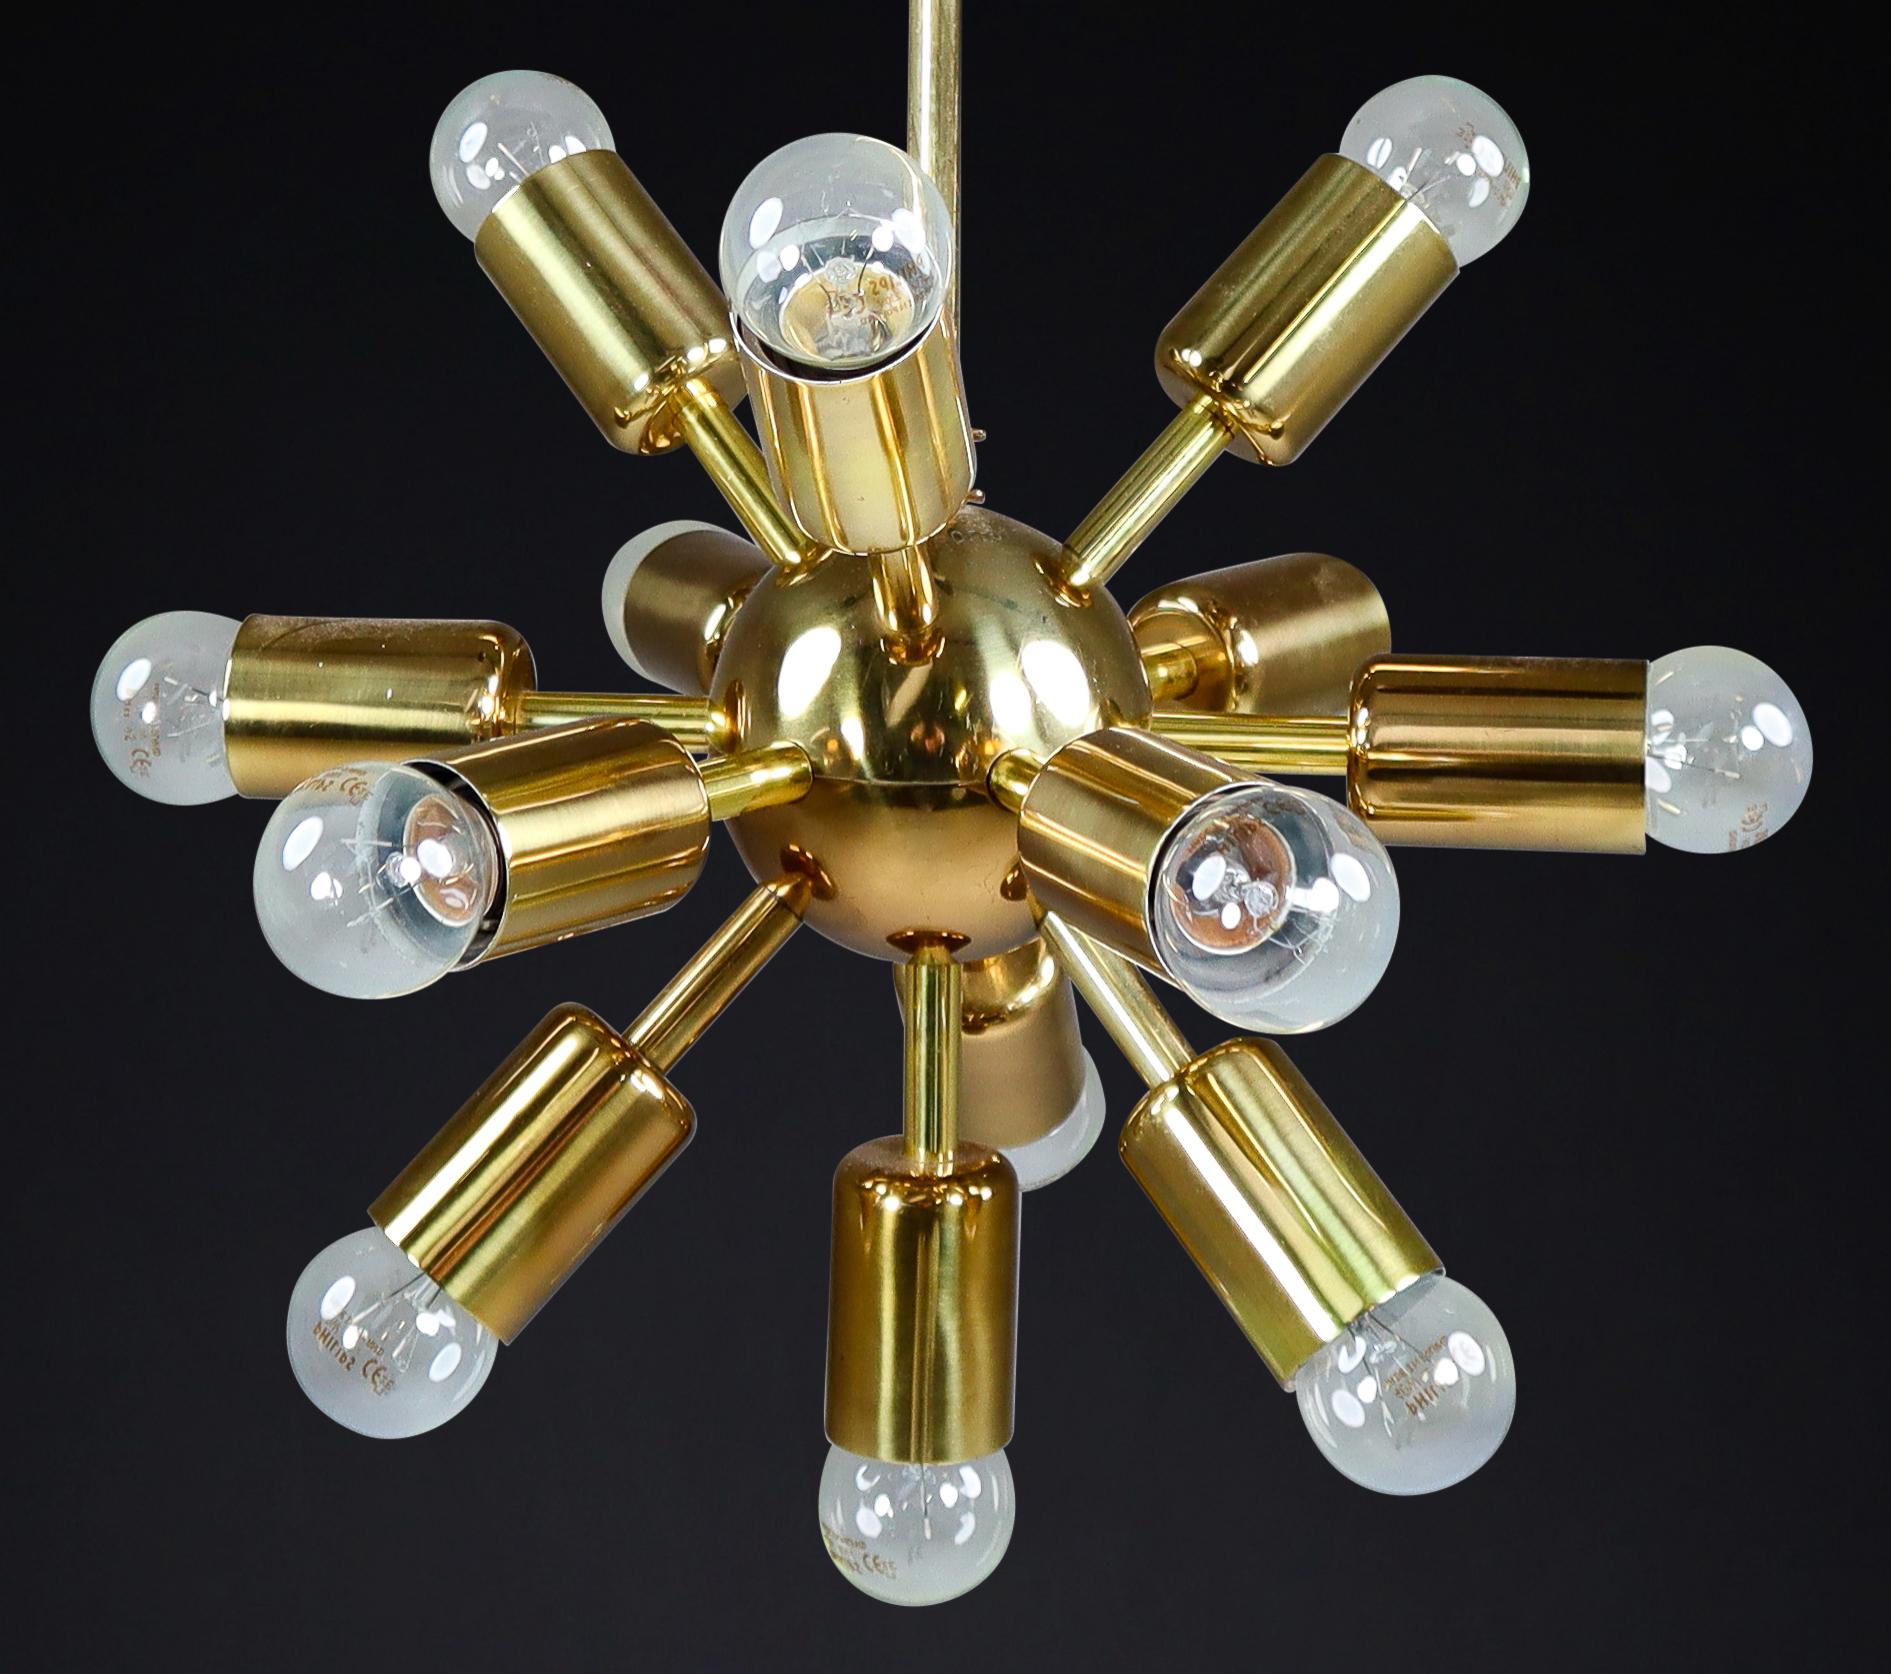 Midcentury Brass Sputnik Chandeliers with Twelve Lights by Drupol, Praque 1960s For Sale 3